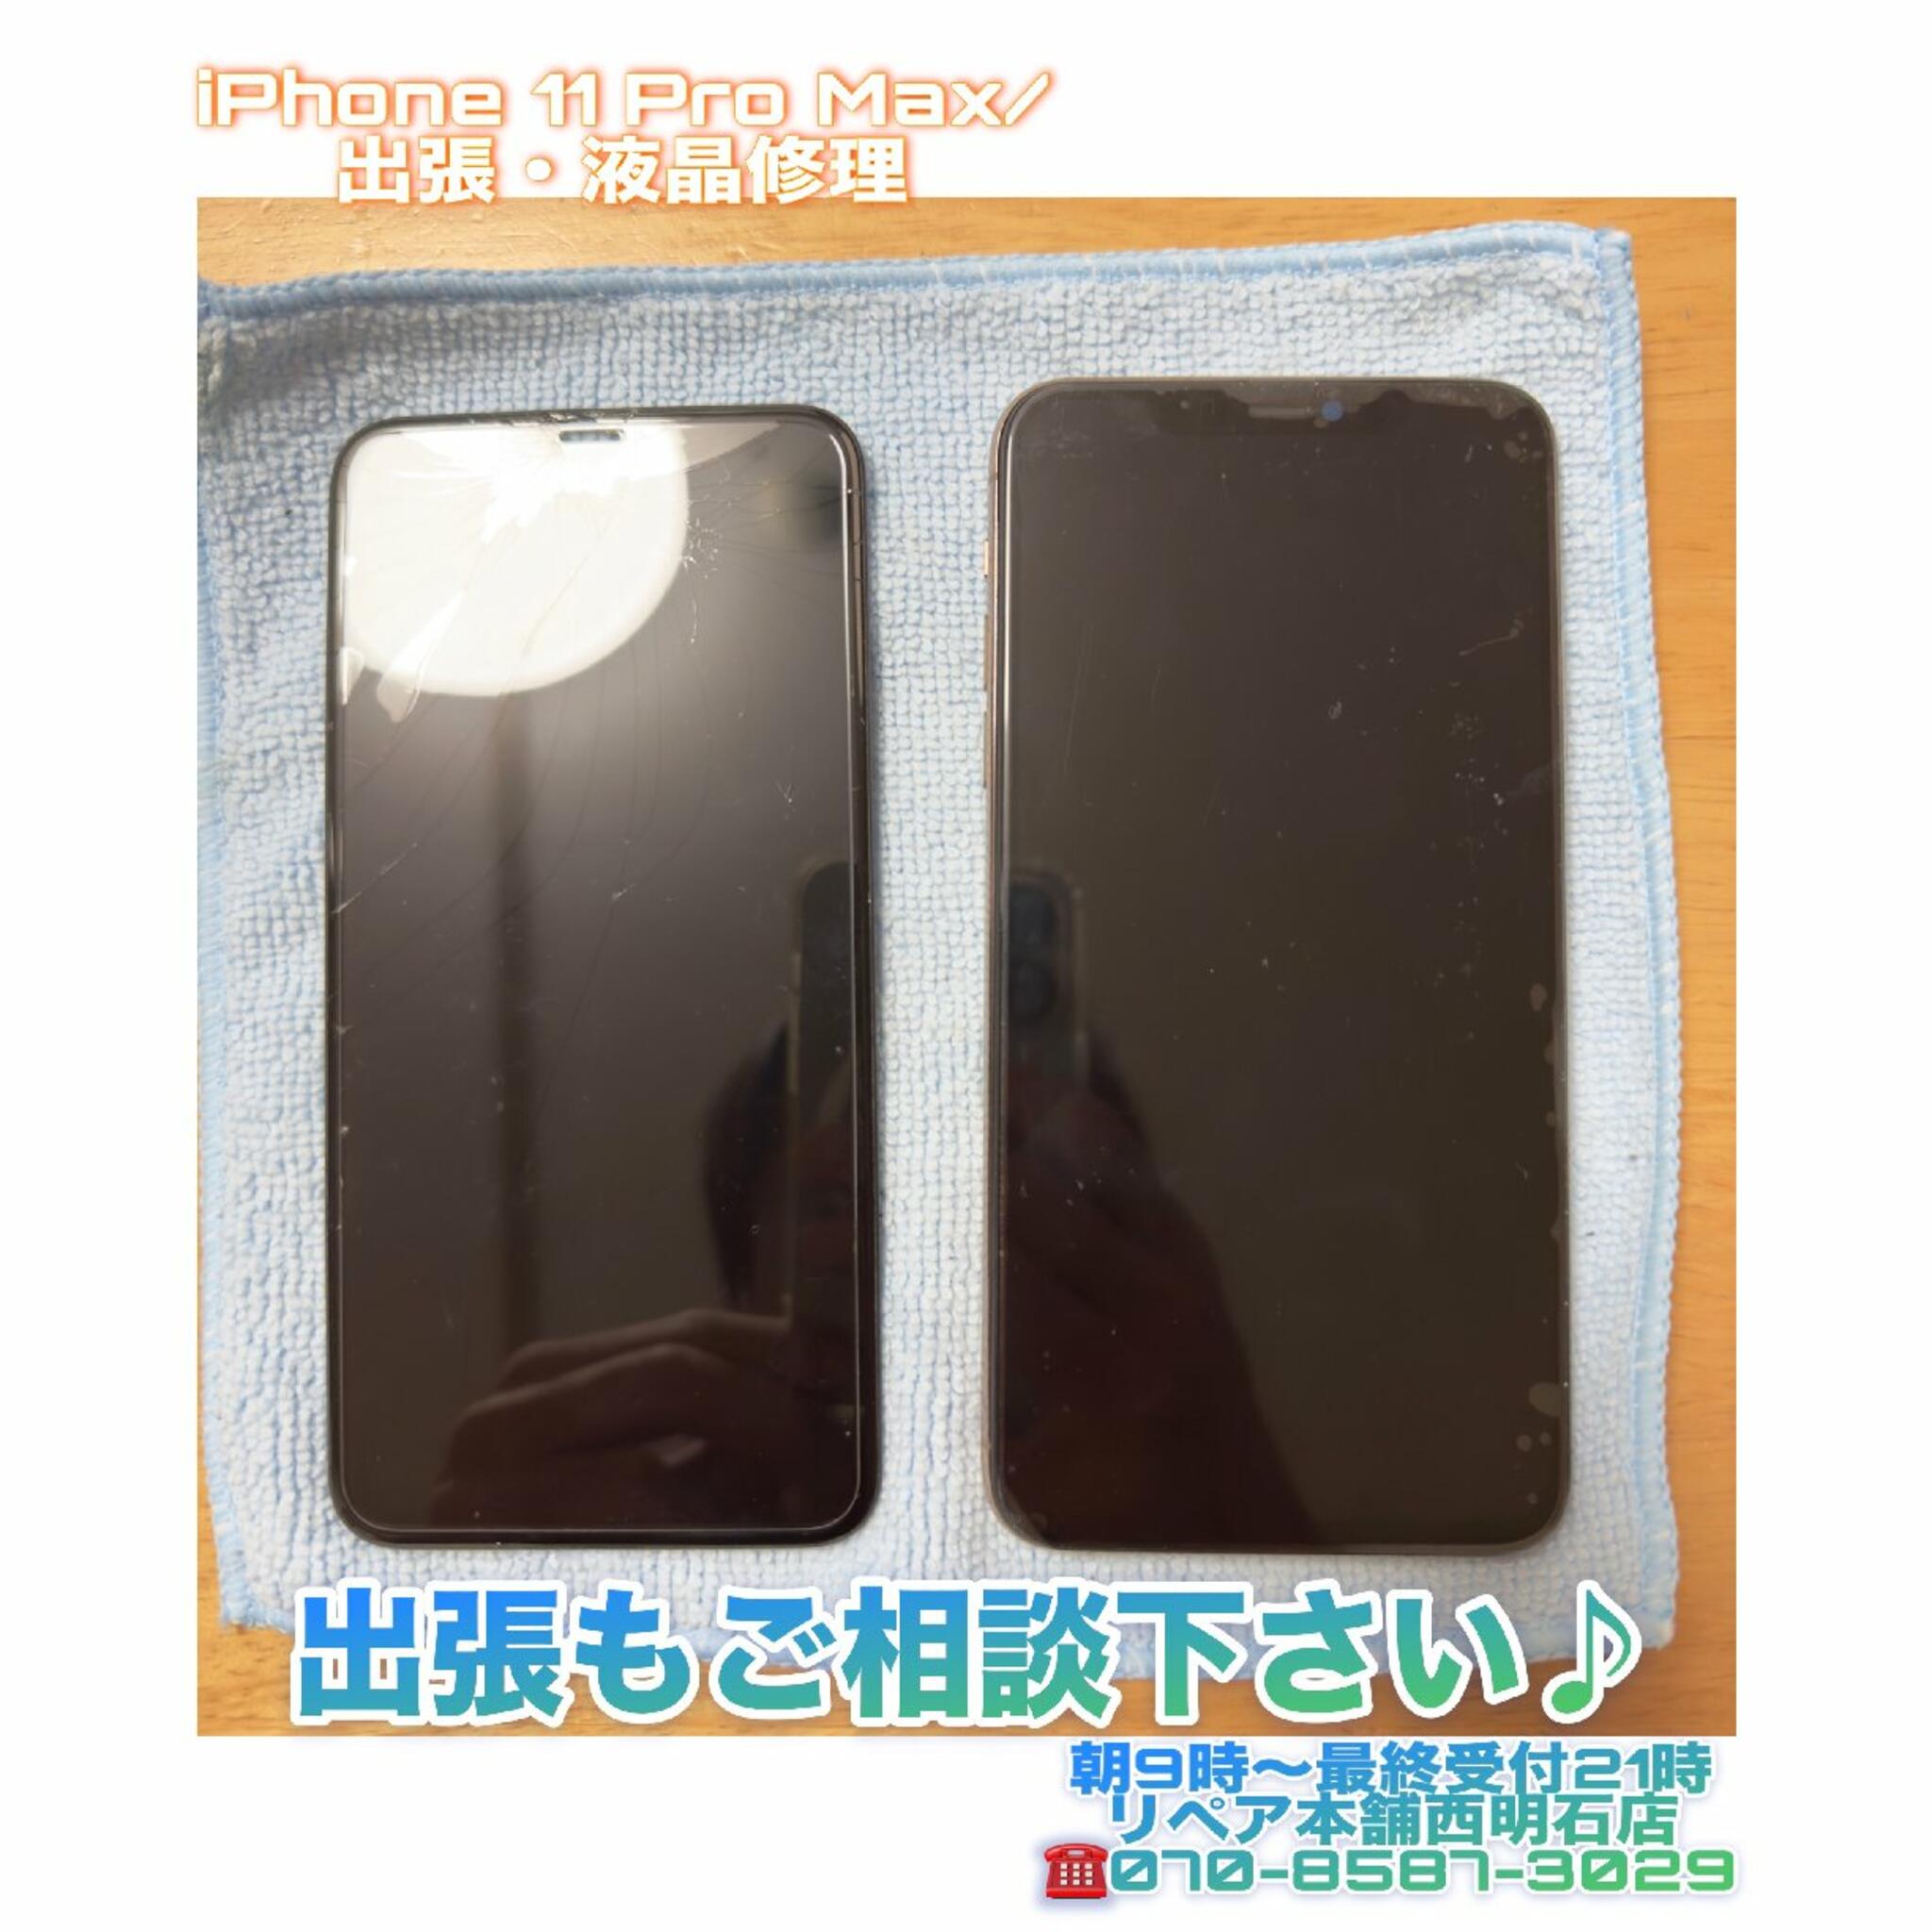 iPhone修理 明石 リペア本舗 西明石店からのお知らせ(💡神戸市西区の方より、iPhone 11 Pro Max画面割れ出張修理ご依頼を頂きました🚲)に関する写真